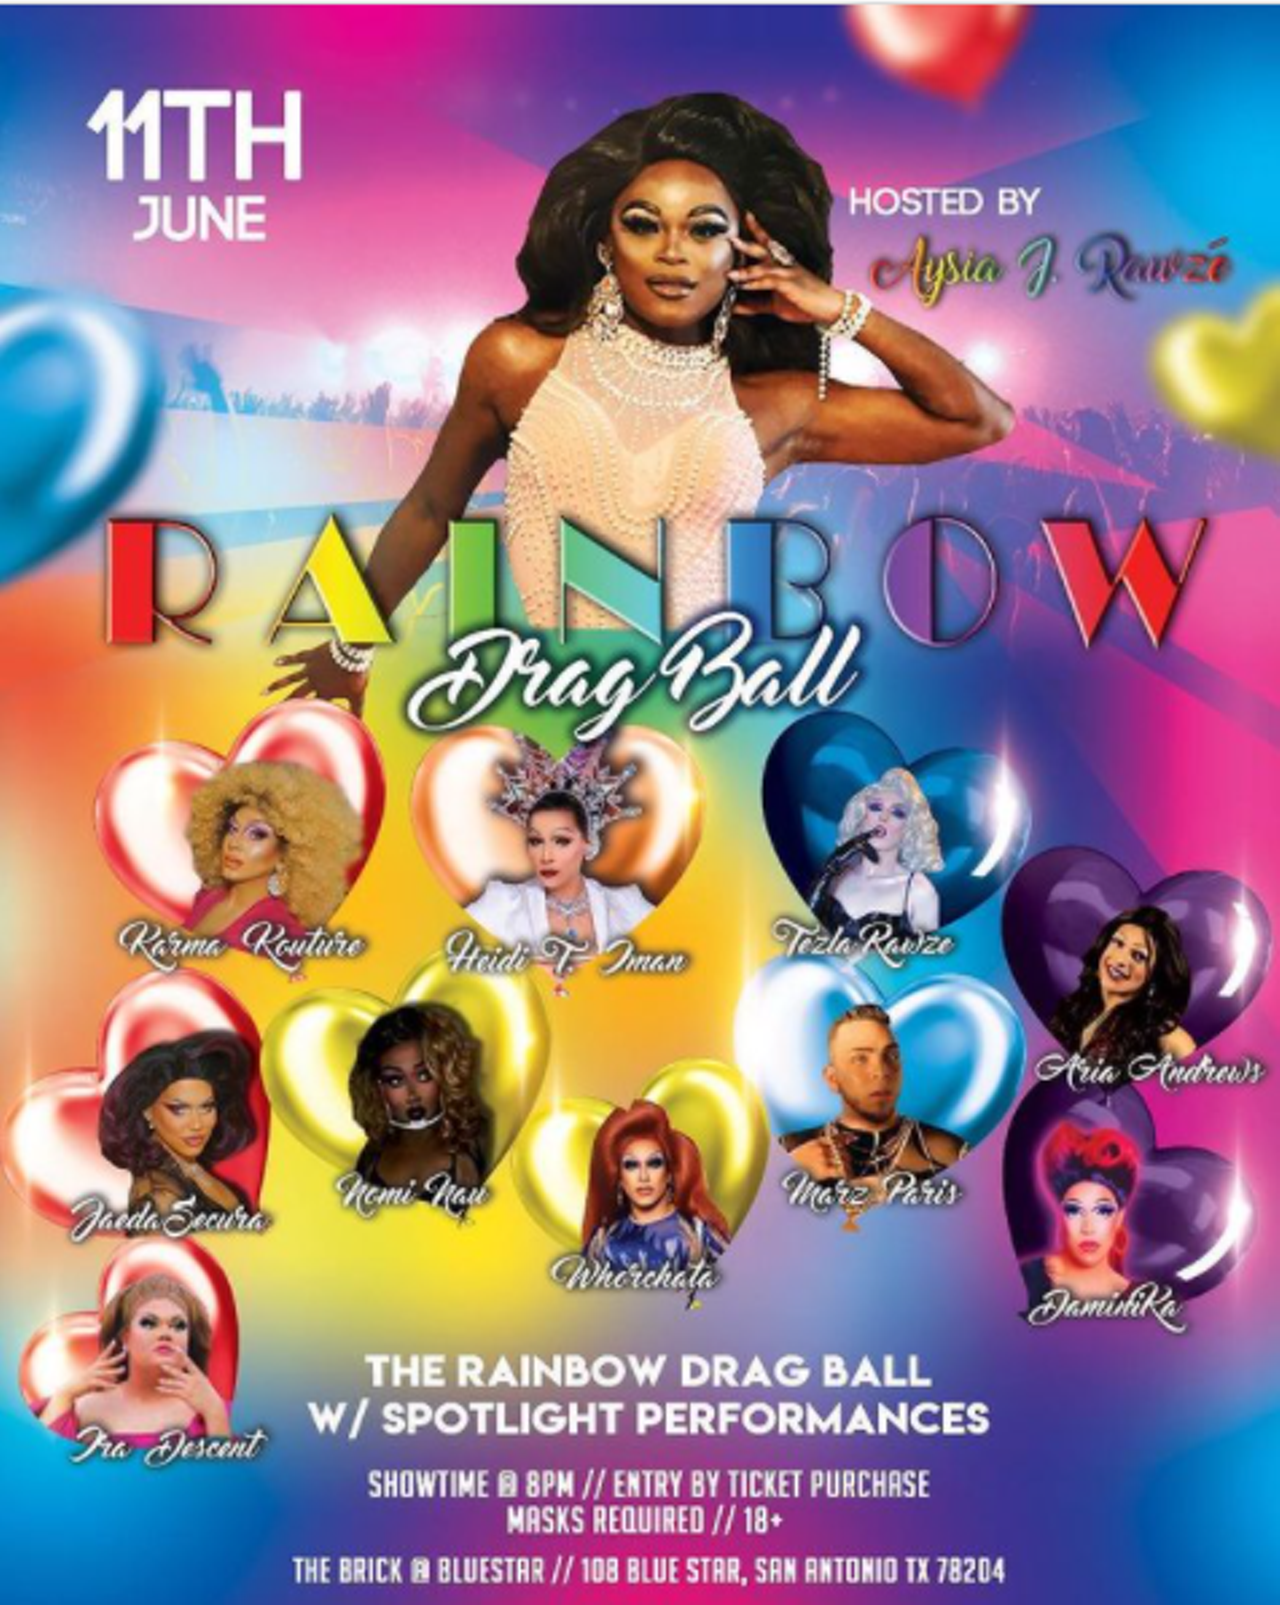 Rainbow Drag Ball
$20-$75, 7 p.m., June 11, Brick at Blue Star Arts Complex, 108 Blue Star, (210) 262-8653, eventbrite.com
Enjoy drag performances by Tezla Rawzè, Nomi Nou, DaminKa, and more at the Rainbow Drag Ball, hosted by Aysia J Rawzè. 
Photo via Instagram / official_hbic_aysia1